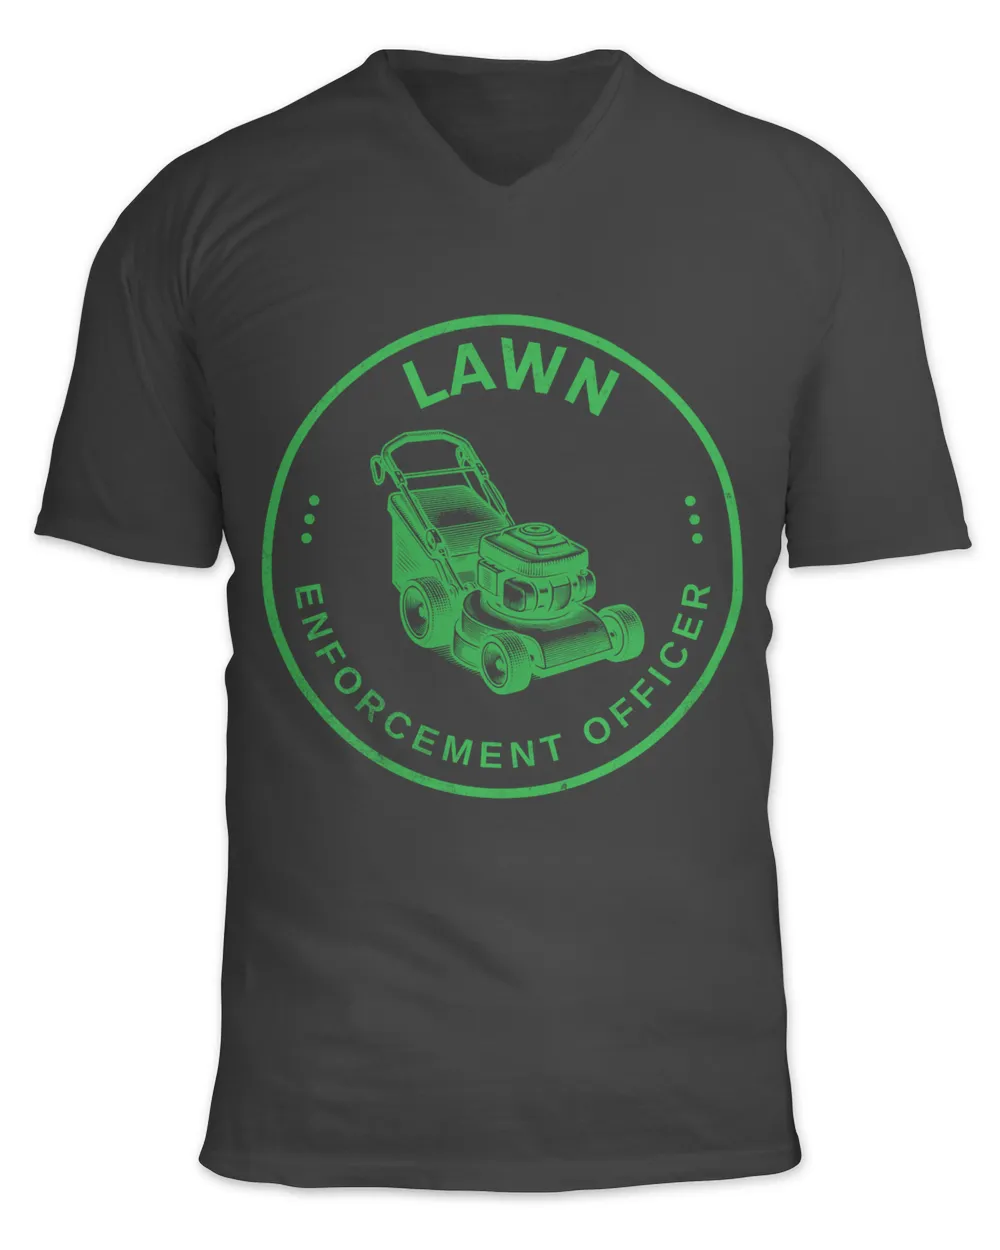 Lawn Enforcement Officer - Gardening Lawn Mower Gift